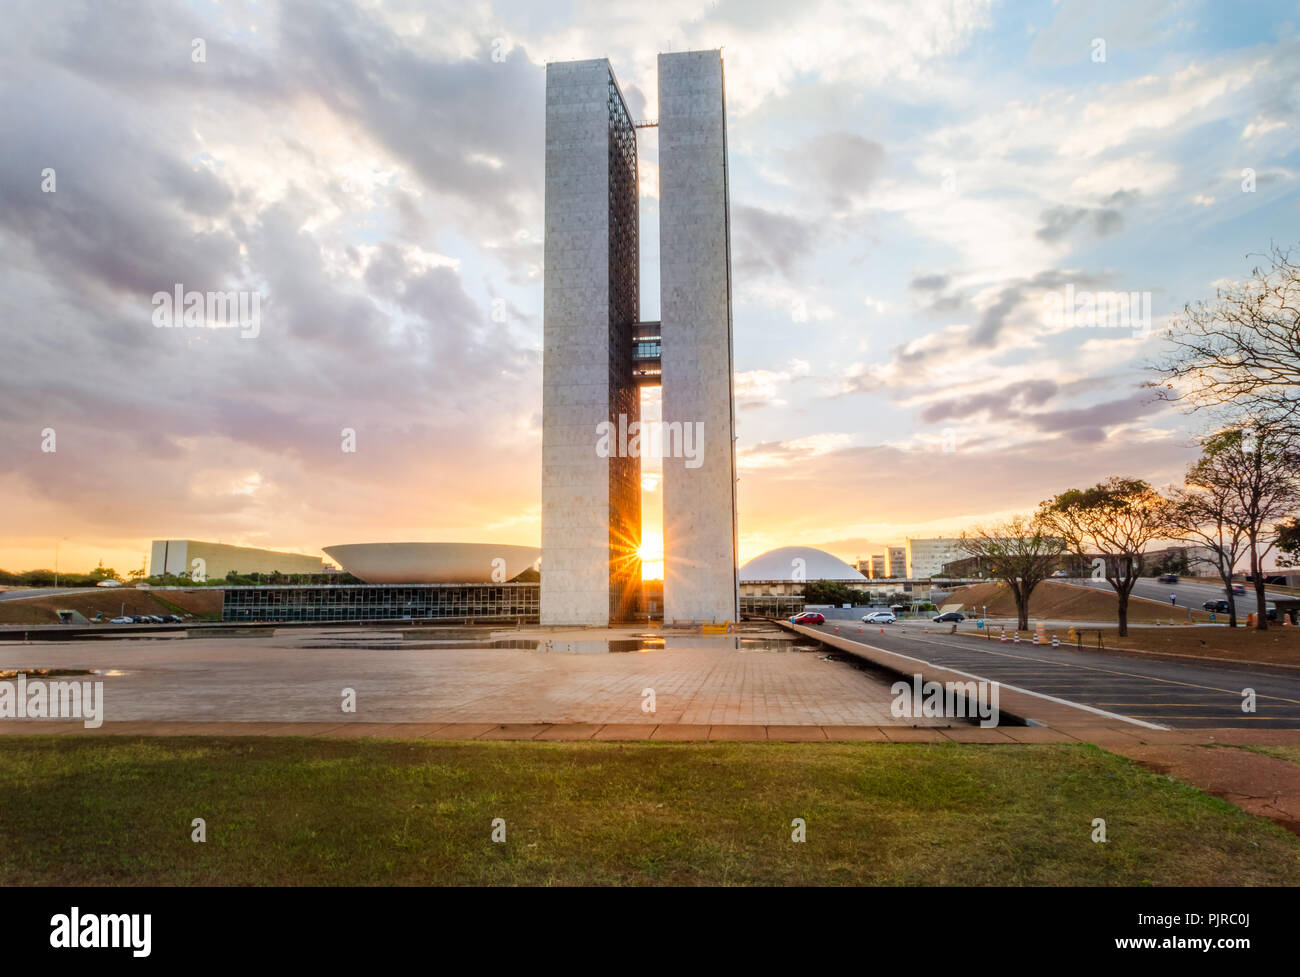 Brasilianischen Nationalen Kongress bei Sonnenuntergang - Brasilia, Distrito Federal, Brasilien Stockfoto